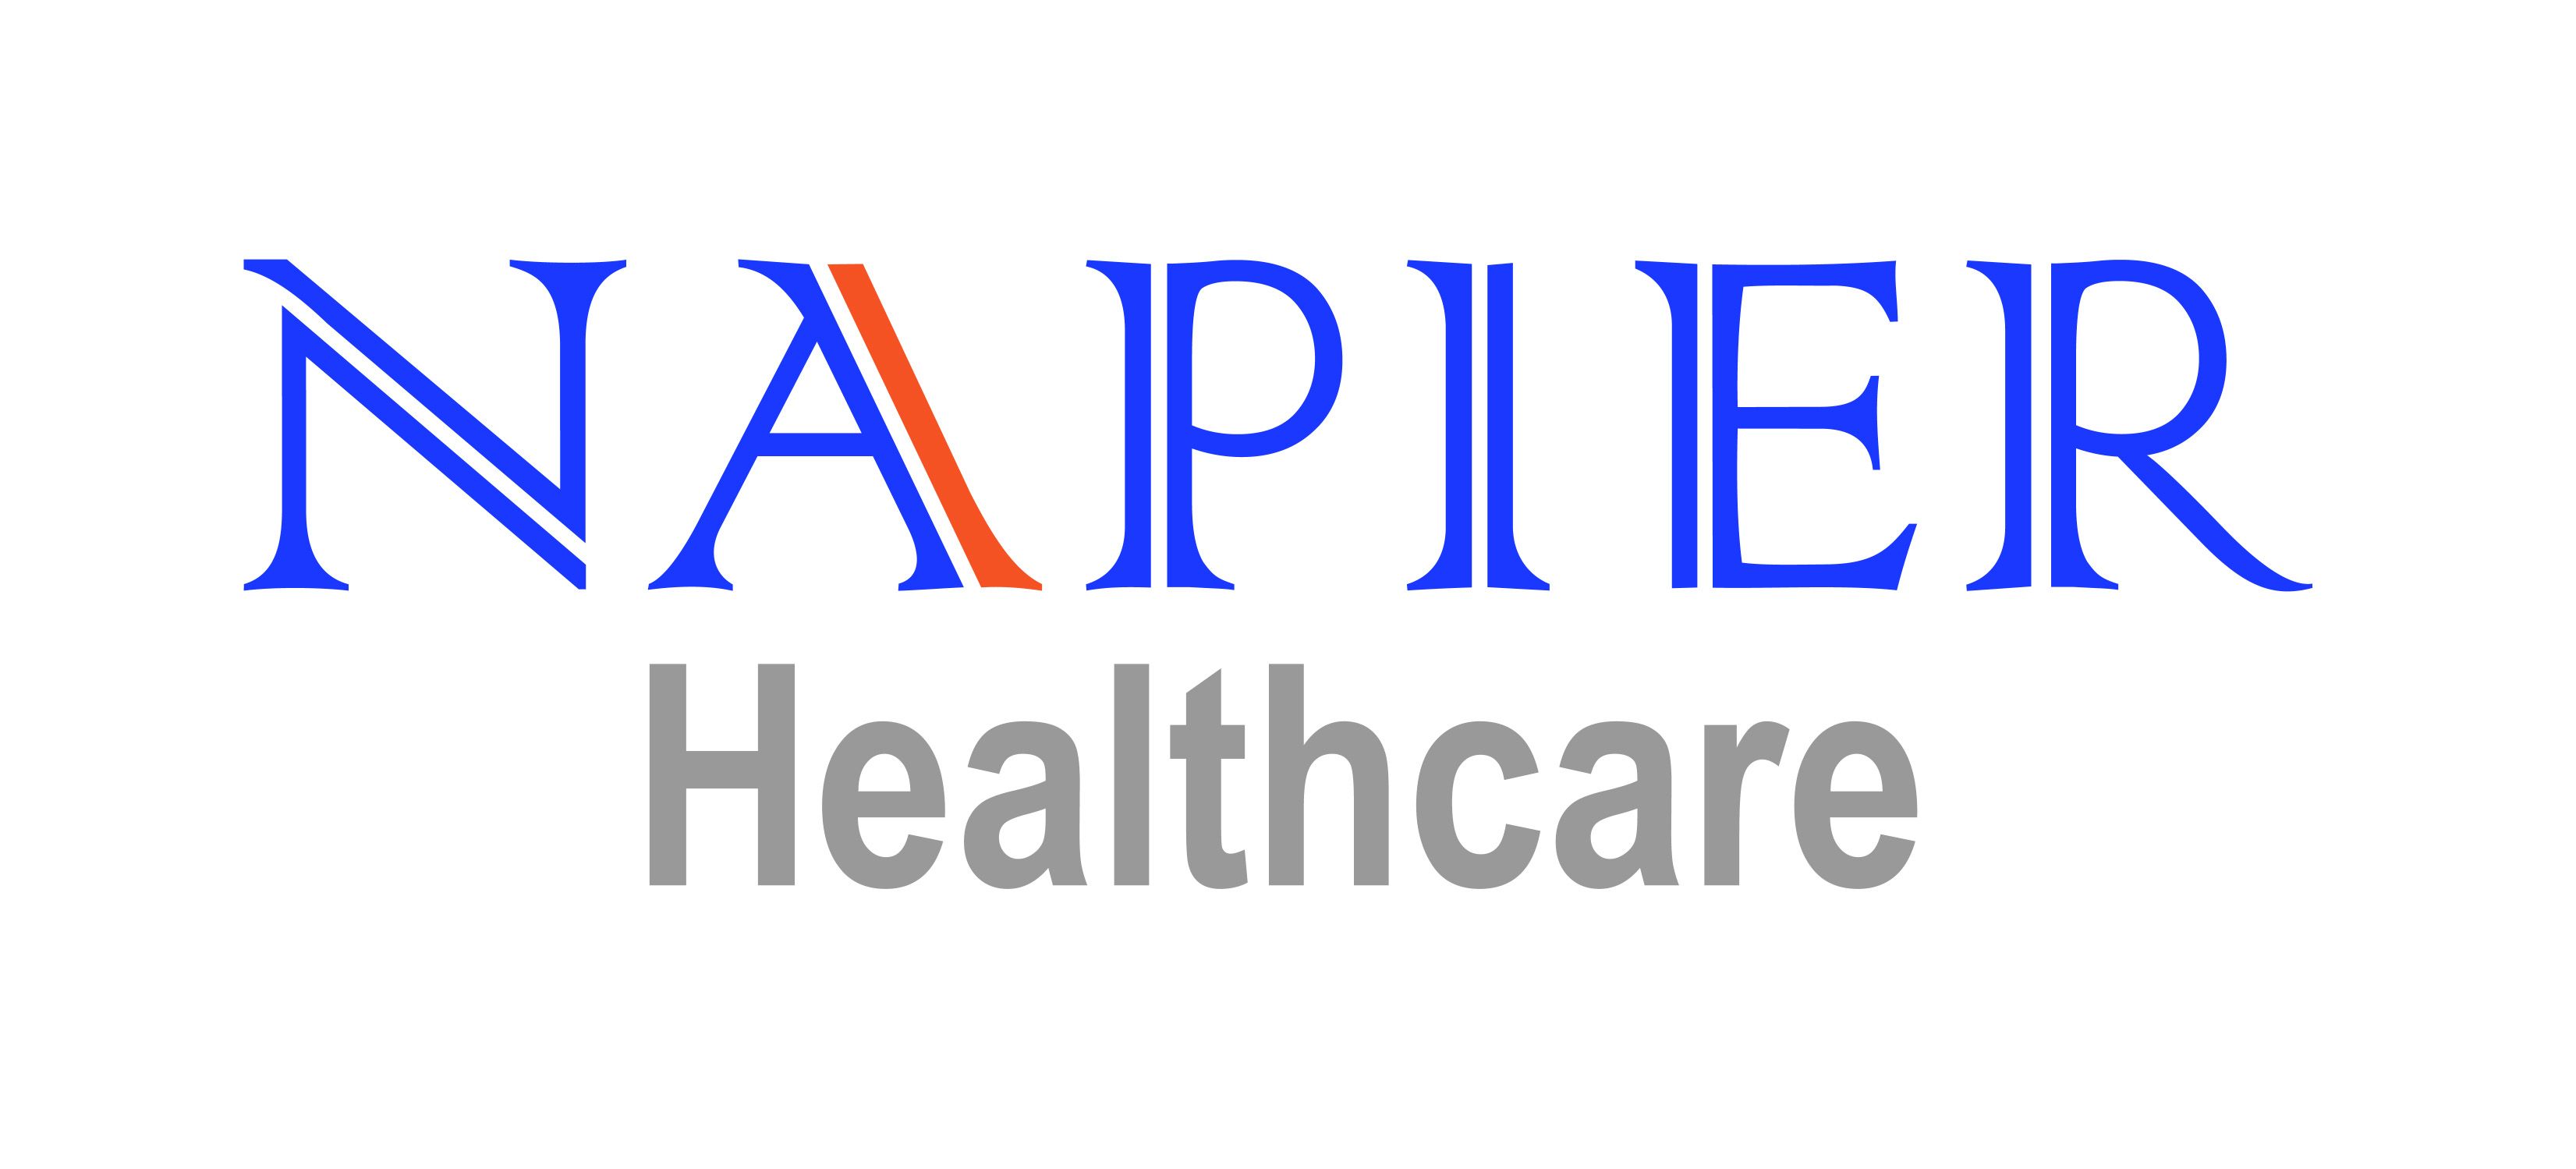 Napier Healthcare Solutions Pte. Ltd. is hiring a Business ...